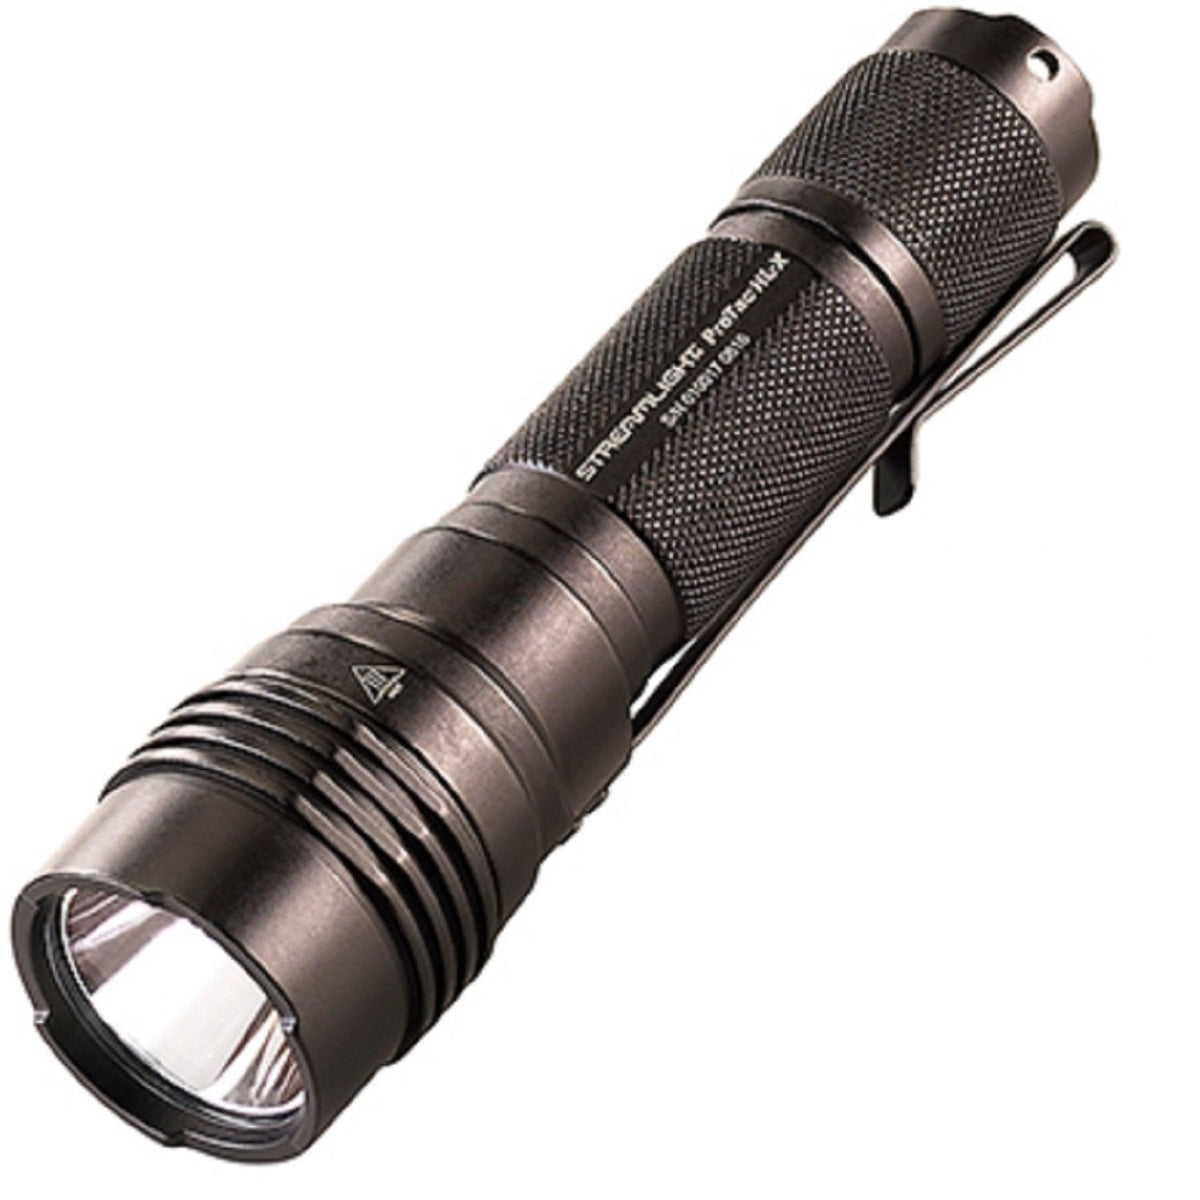 Streamlight ProTac HL-X 1000 Lumens Flashlight - Black box Flashlights and Lighting Streamlight Tactical Gear Supplier Tactical Distributors Australia